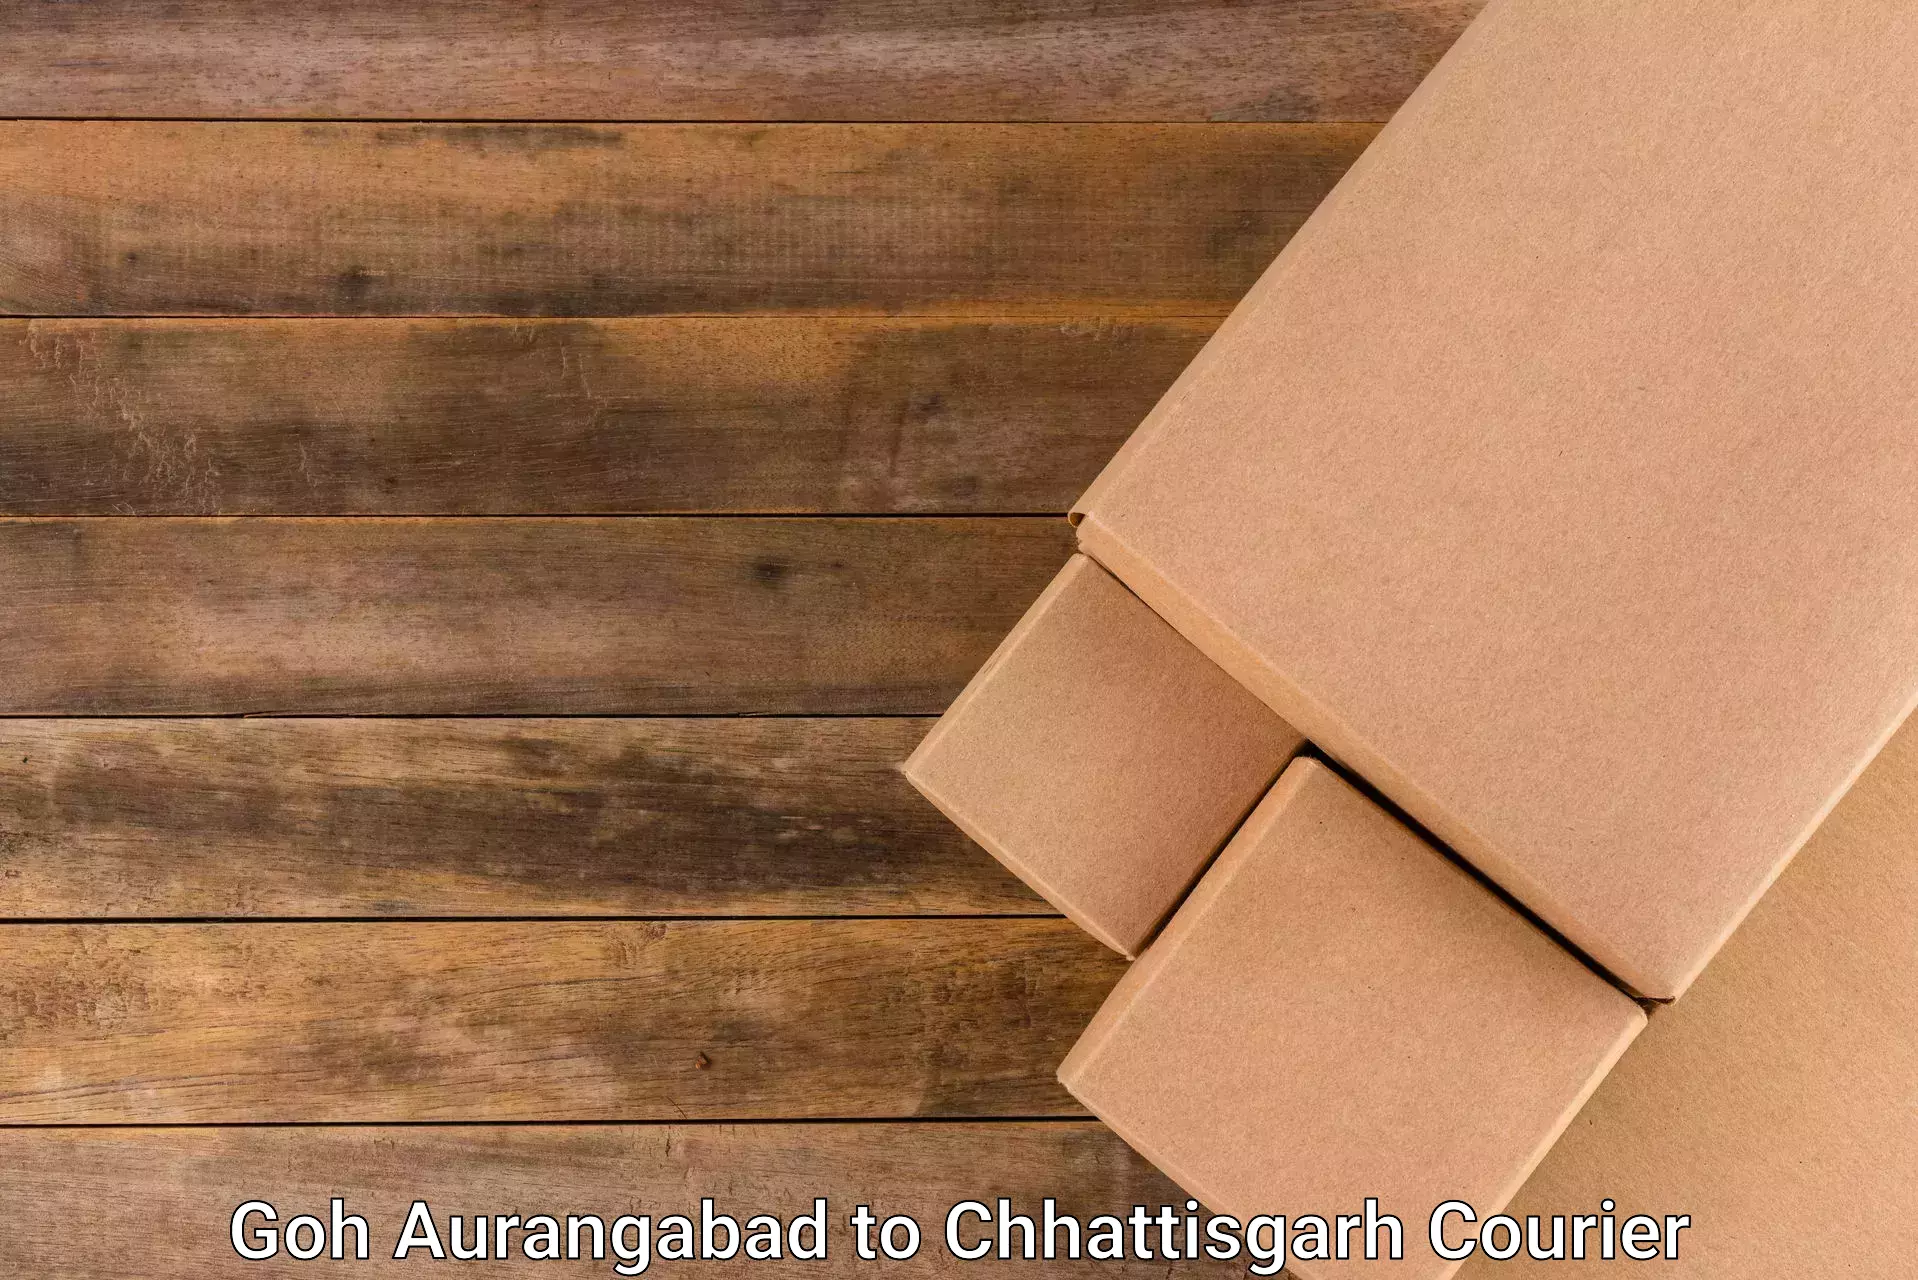 On-call courier service in Goh Aurangabad to Chhattisgarh